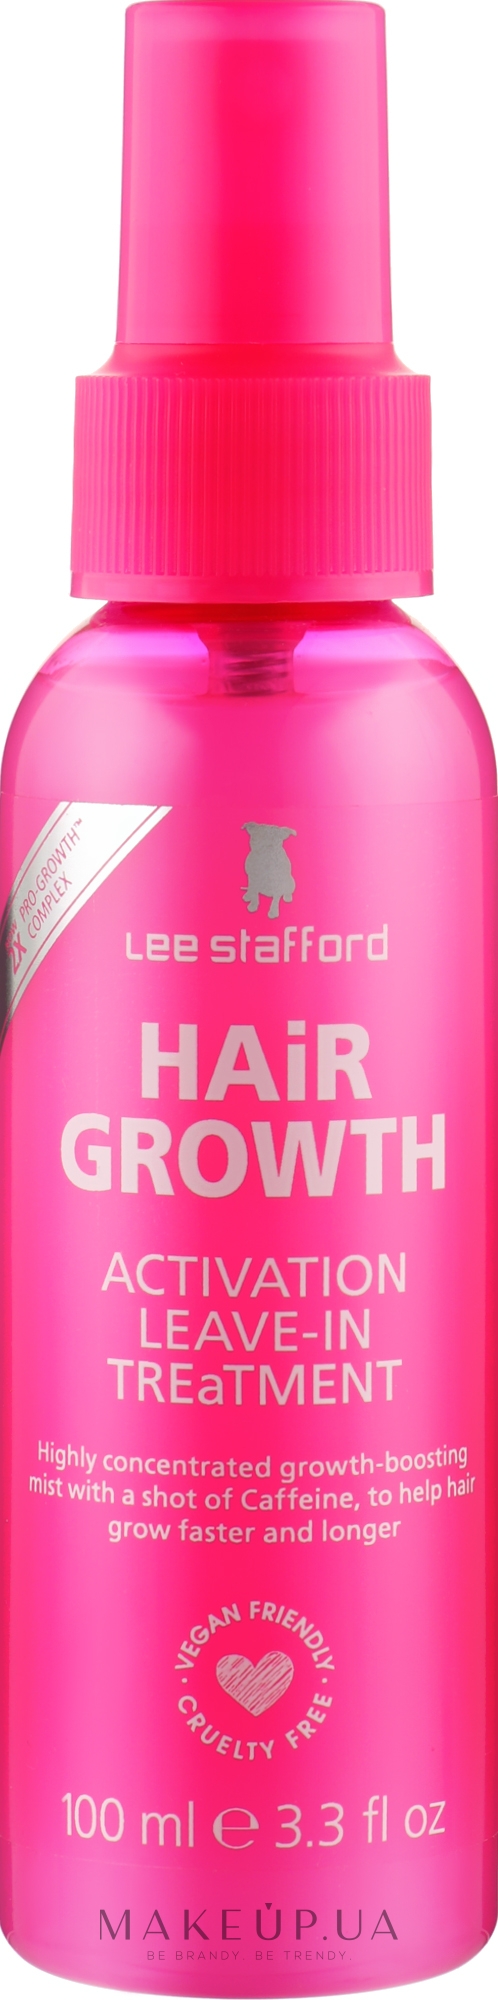 Сироватка для посилення росту волосся - Lee Stafford Hair Growth Activation Leave-In Treatment — фото 100ml